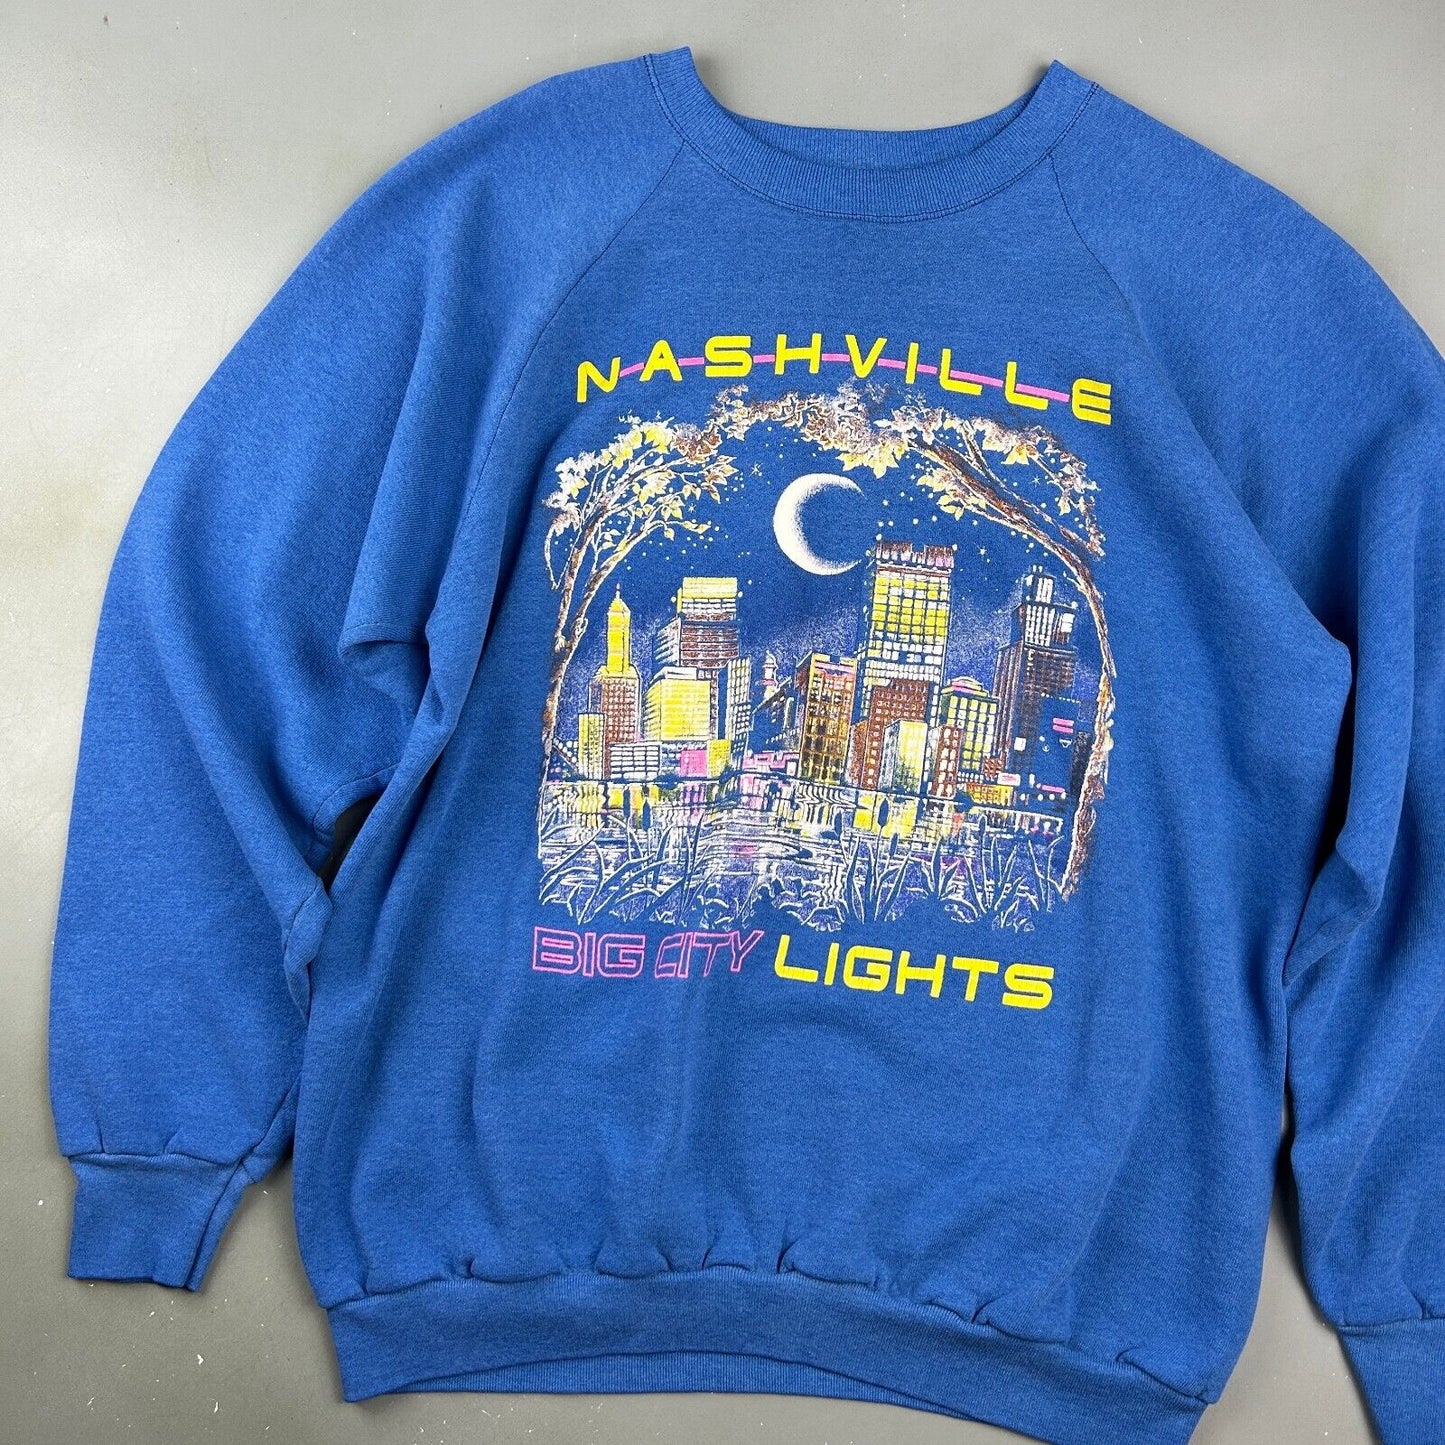 VINTAGE 90s | NASHVILLE Big City Lights Blue Crewneck Sweater sz L Adult